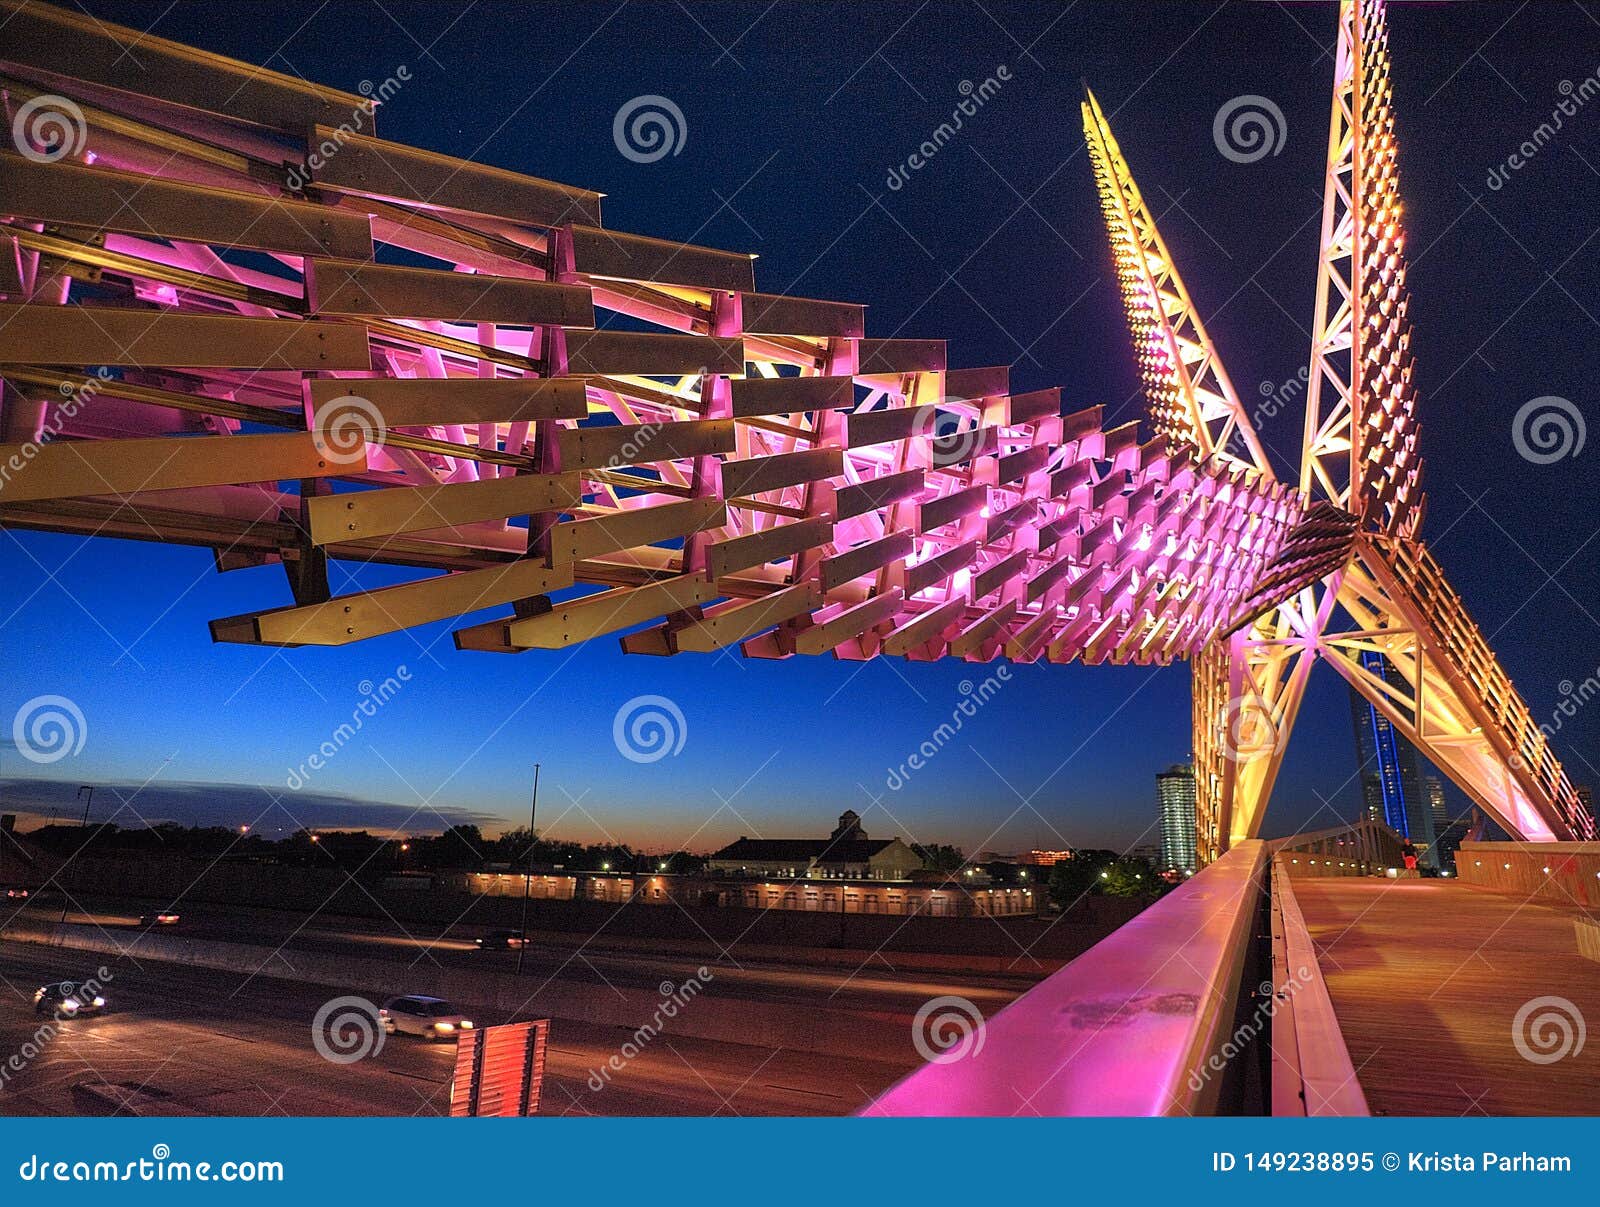 sky dance bridge on i-40 in oklahoma city, horizontal image